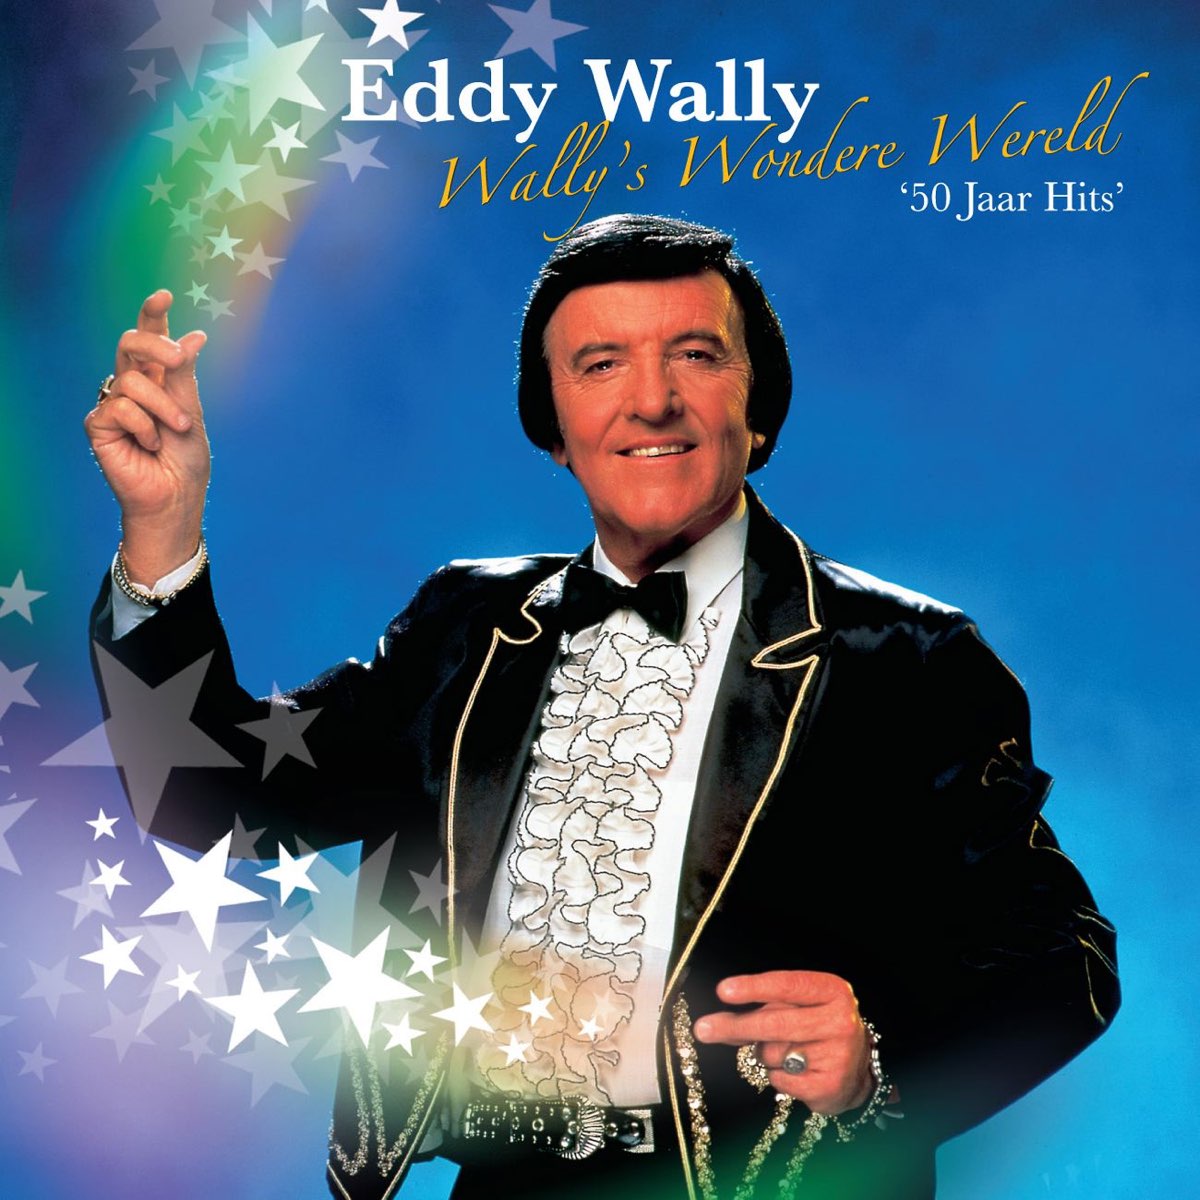 als resultaat in het midden van niets fascisme Wally's Wondere Wereld by Eddy Wally on Apple Music